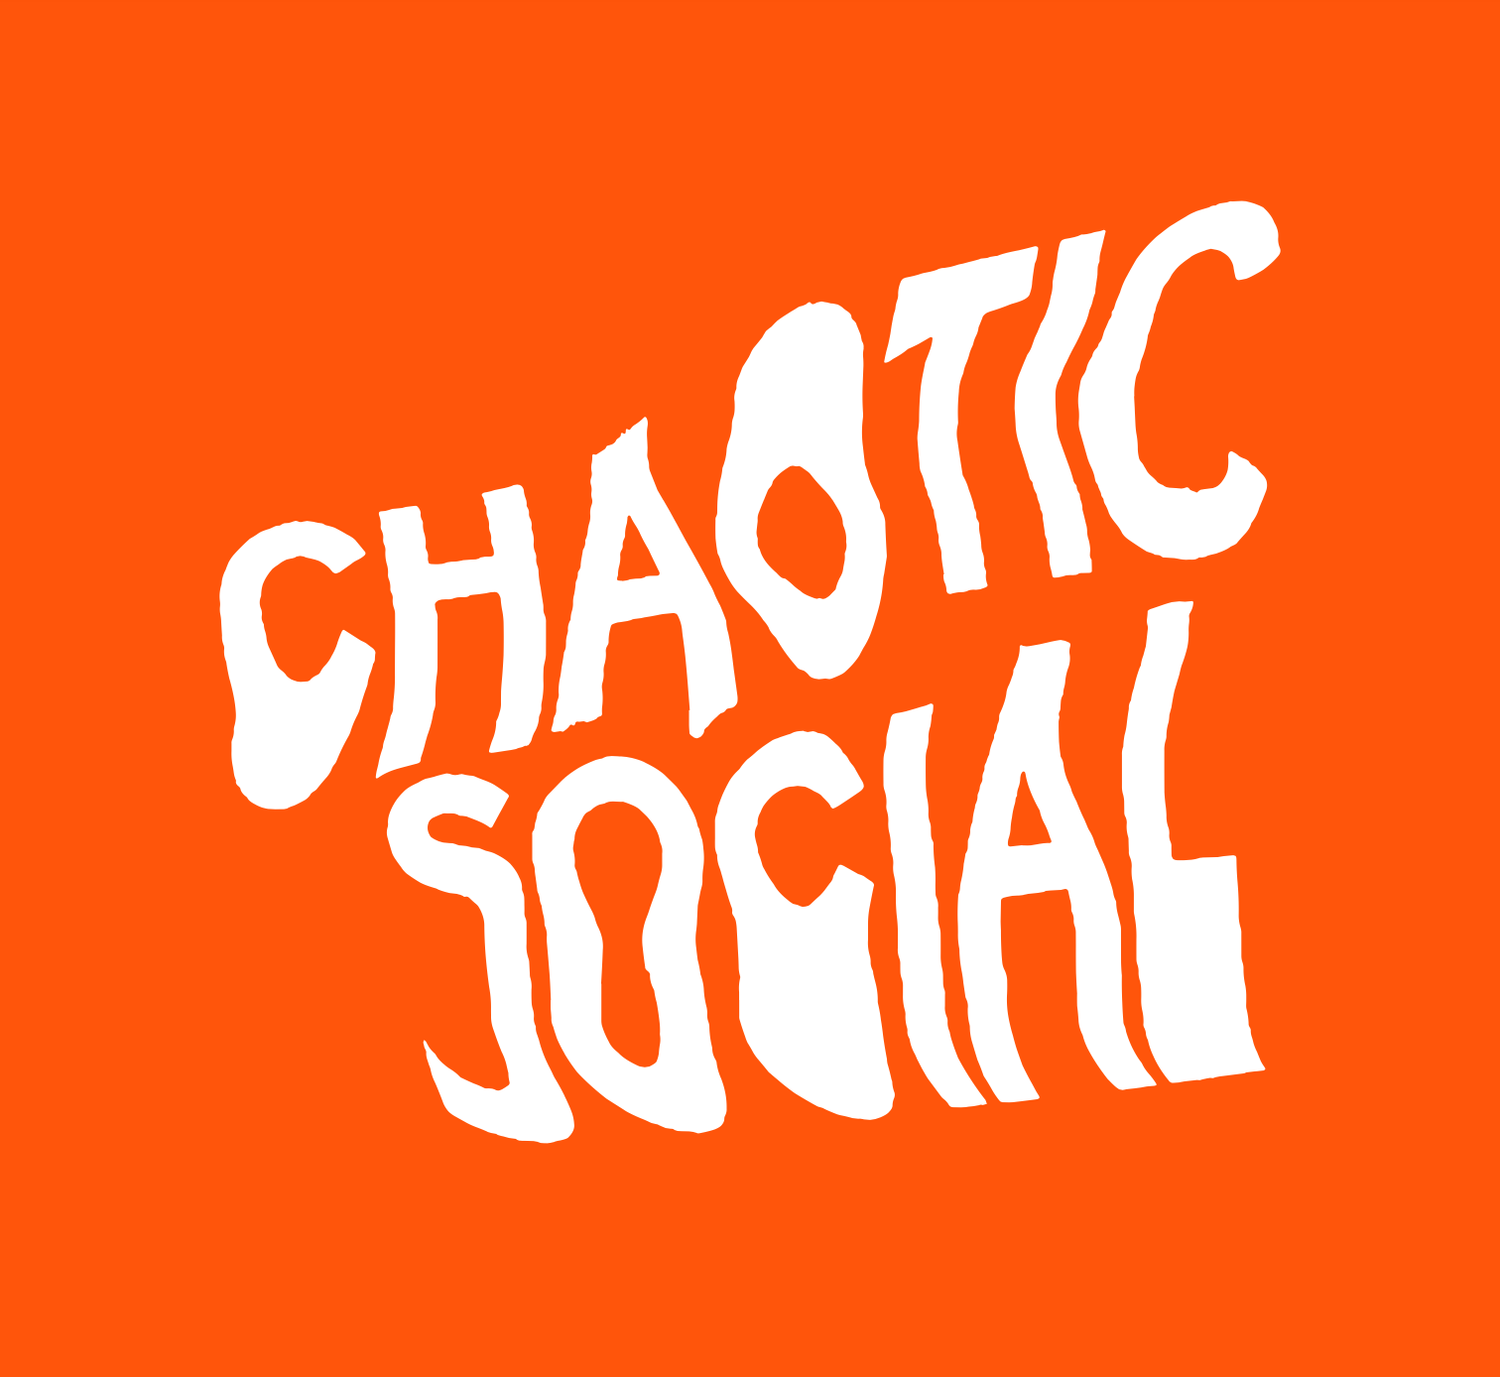 Chaotic Social